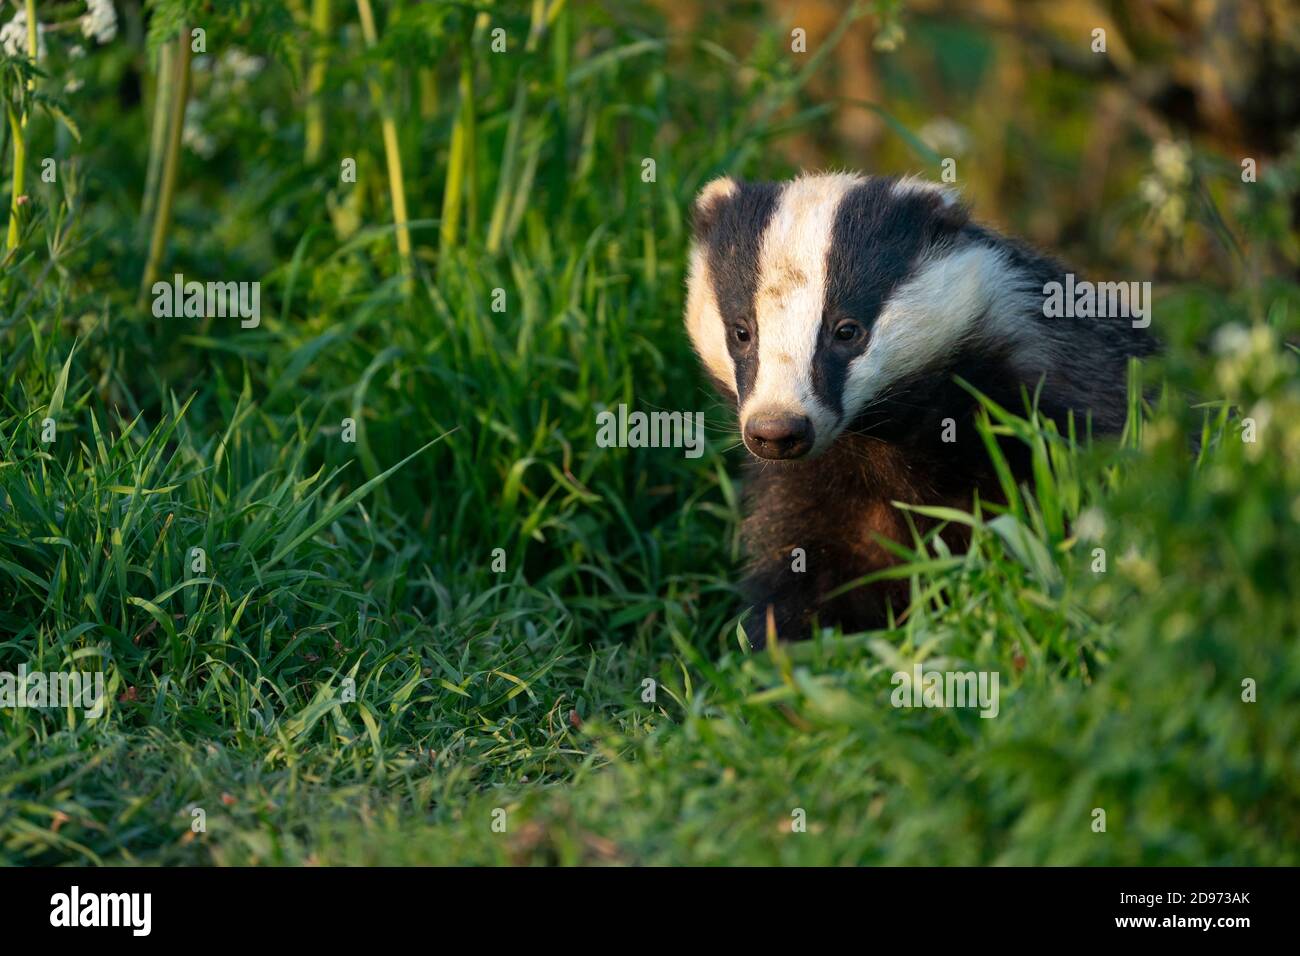 Badger (Meles meles) amongst grass, Engalnd Stock Photo